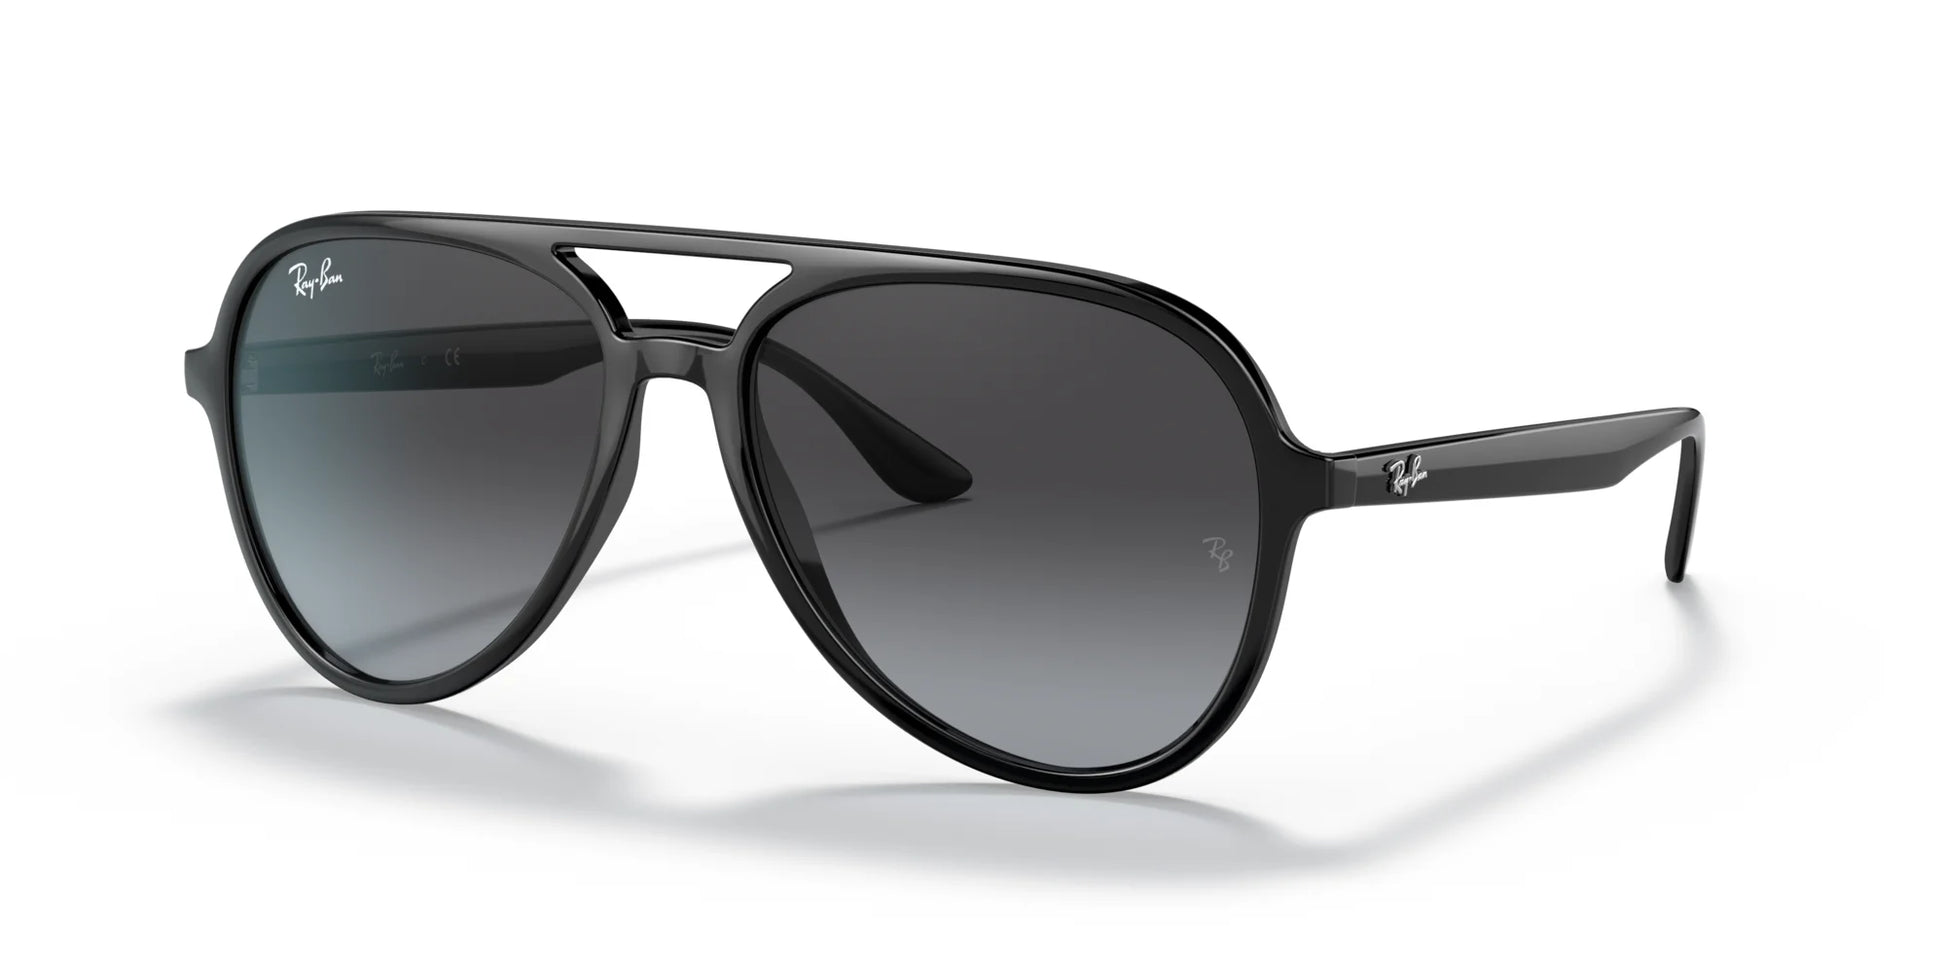 Ray-Ban RB4376 Sunglasses Black / Grey Gradient